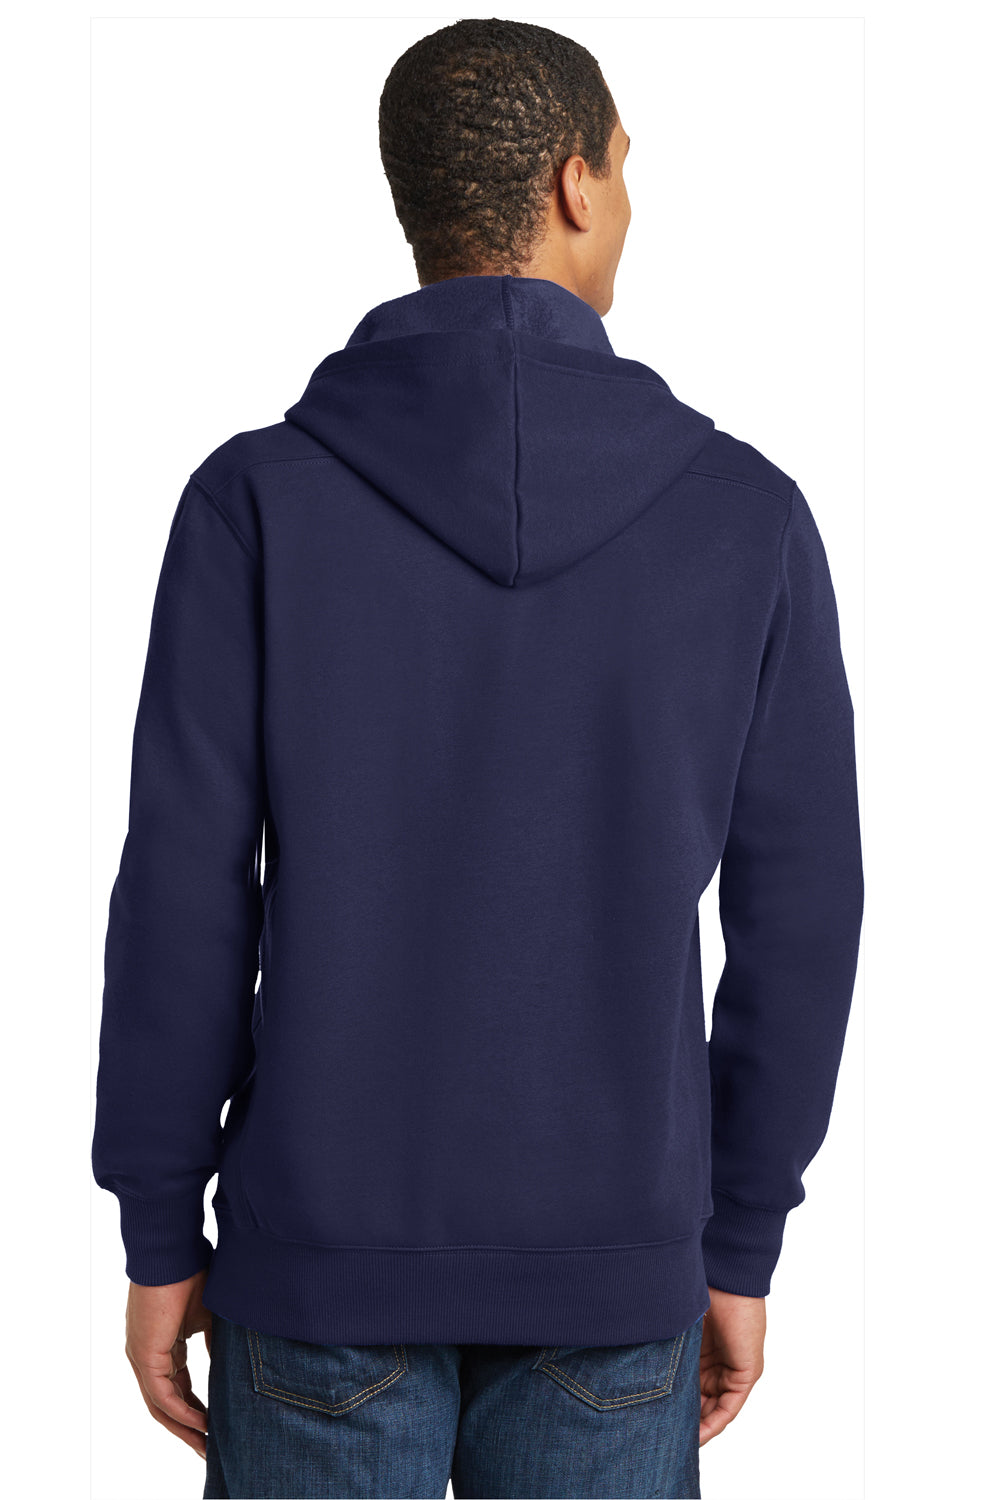 Sport-Tek ST271 Mens Lace Up Fleece Hooded Sweatshirt Hoodie Navy Blue Back